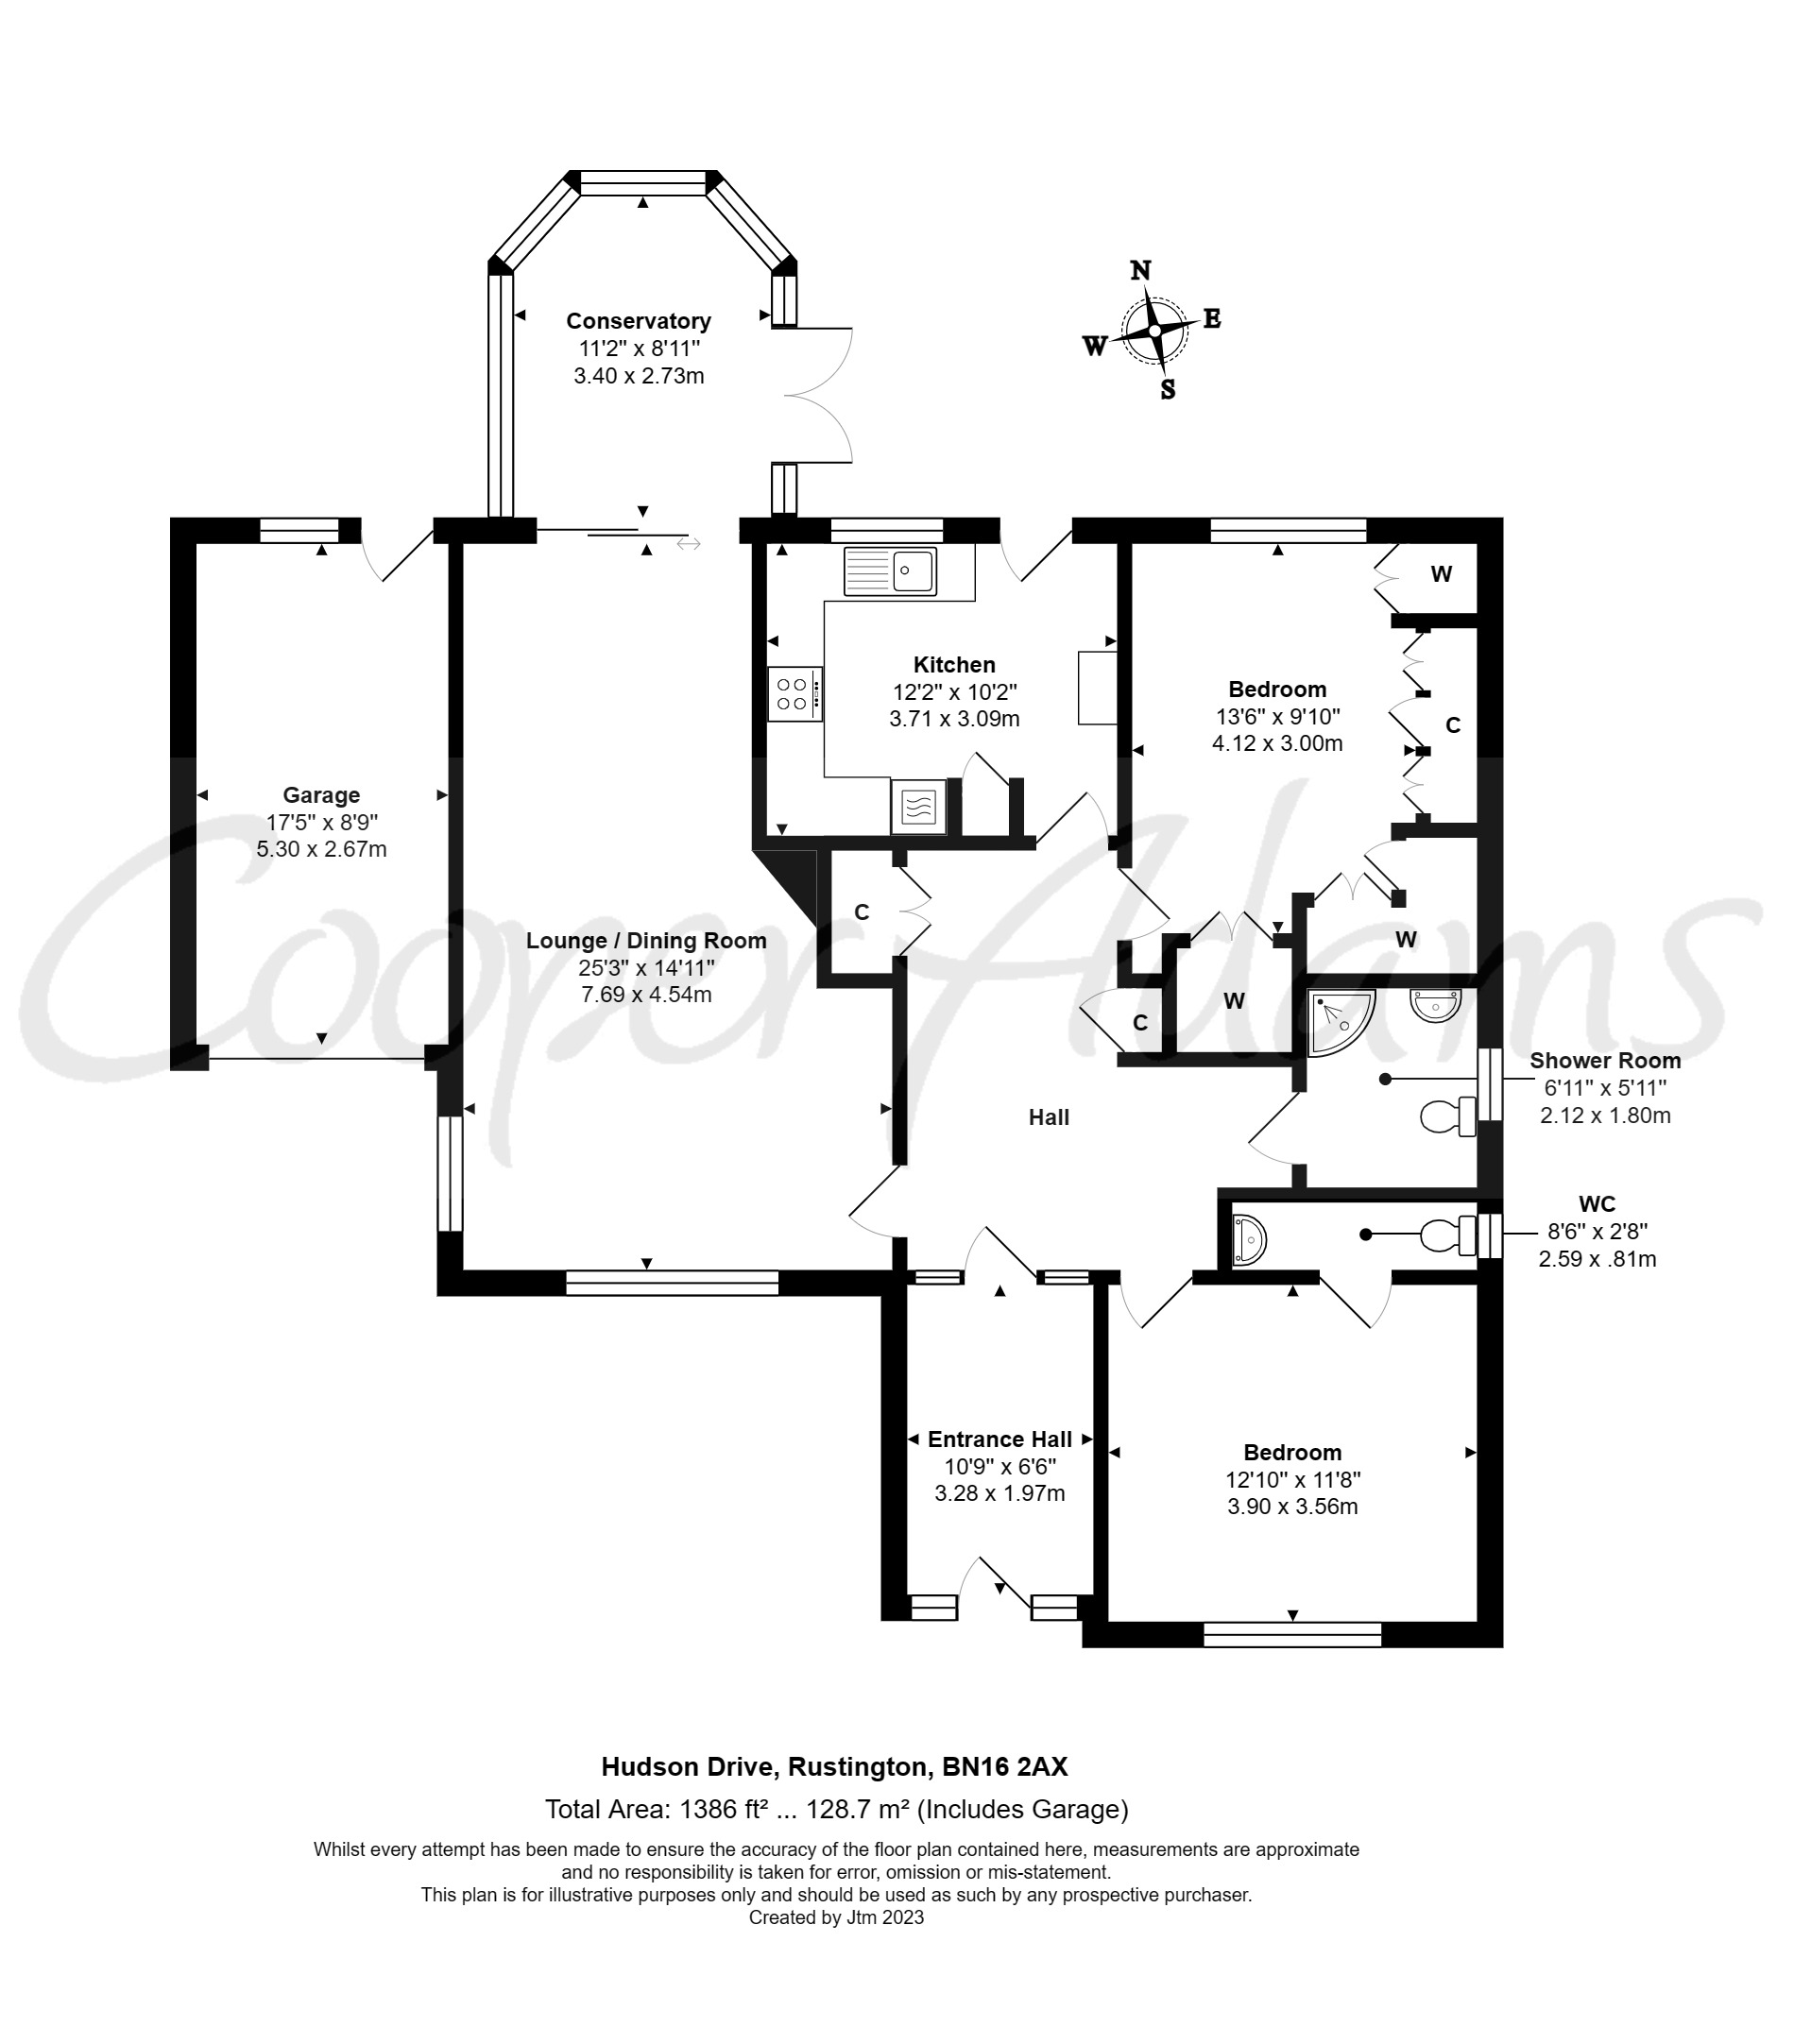 2 bed bungalow for sale in Hudson Drive, Rustington - Property floorplan